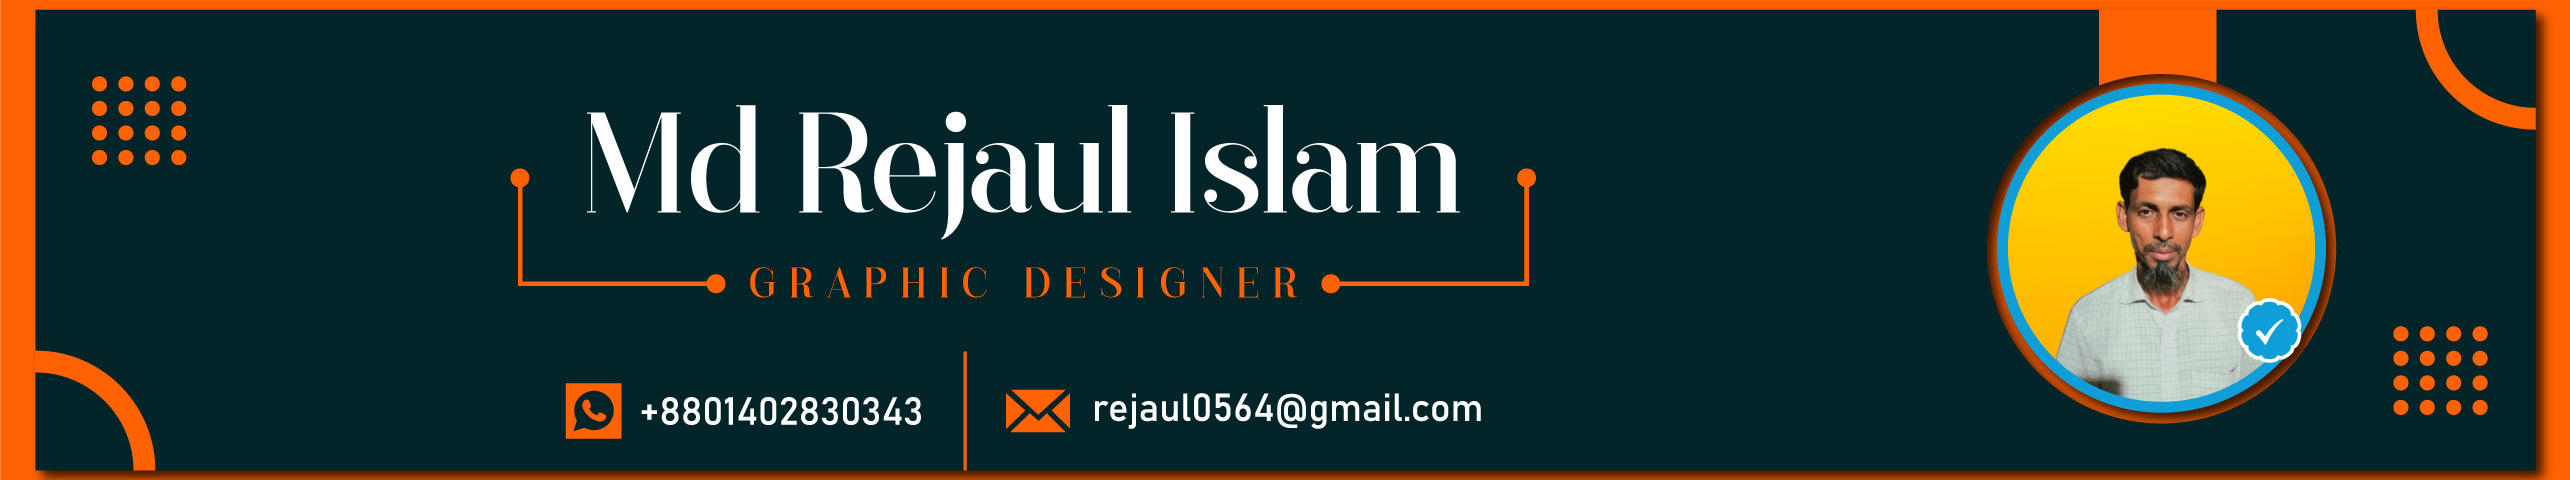 Md Rejaul Islam's profile banner